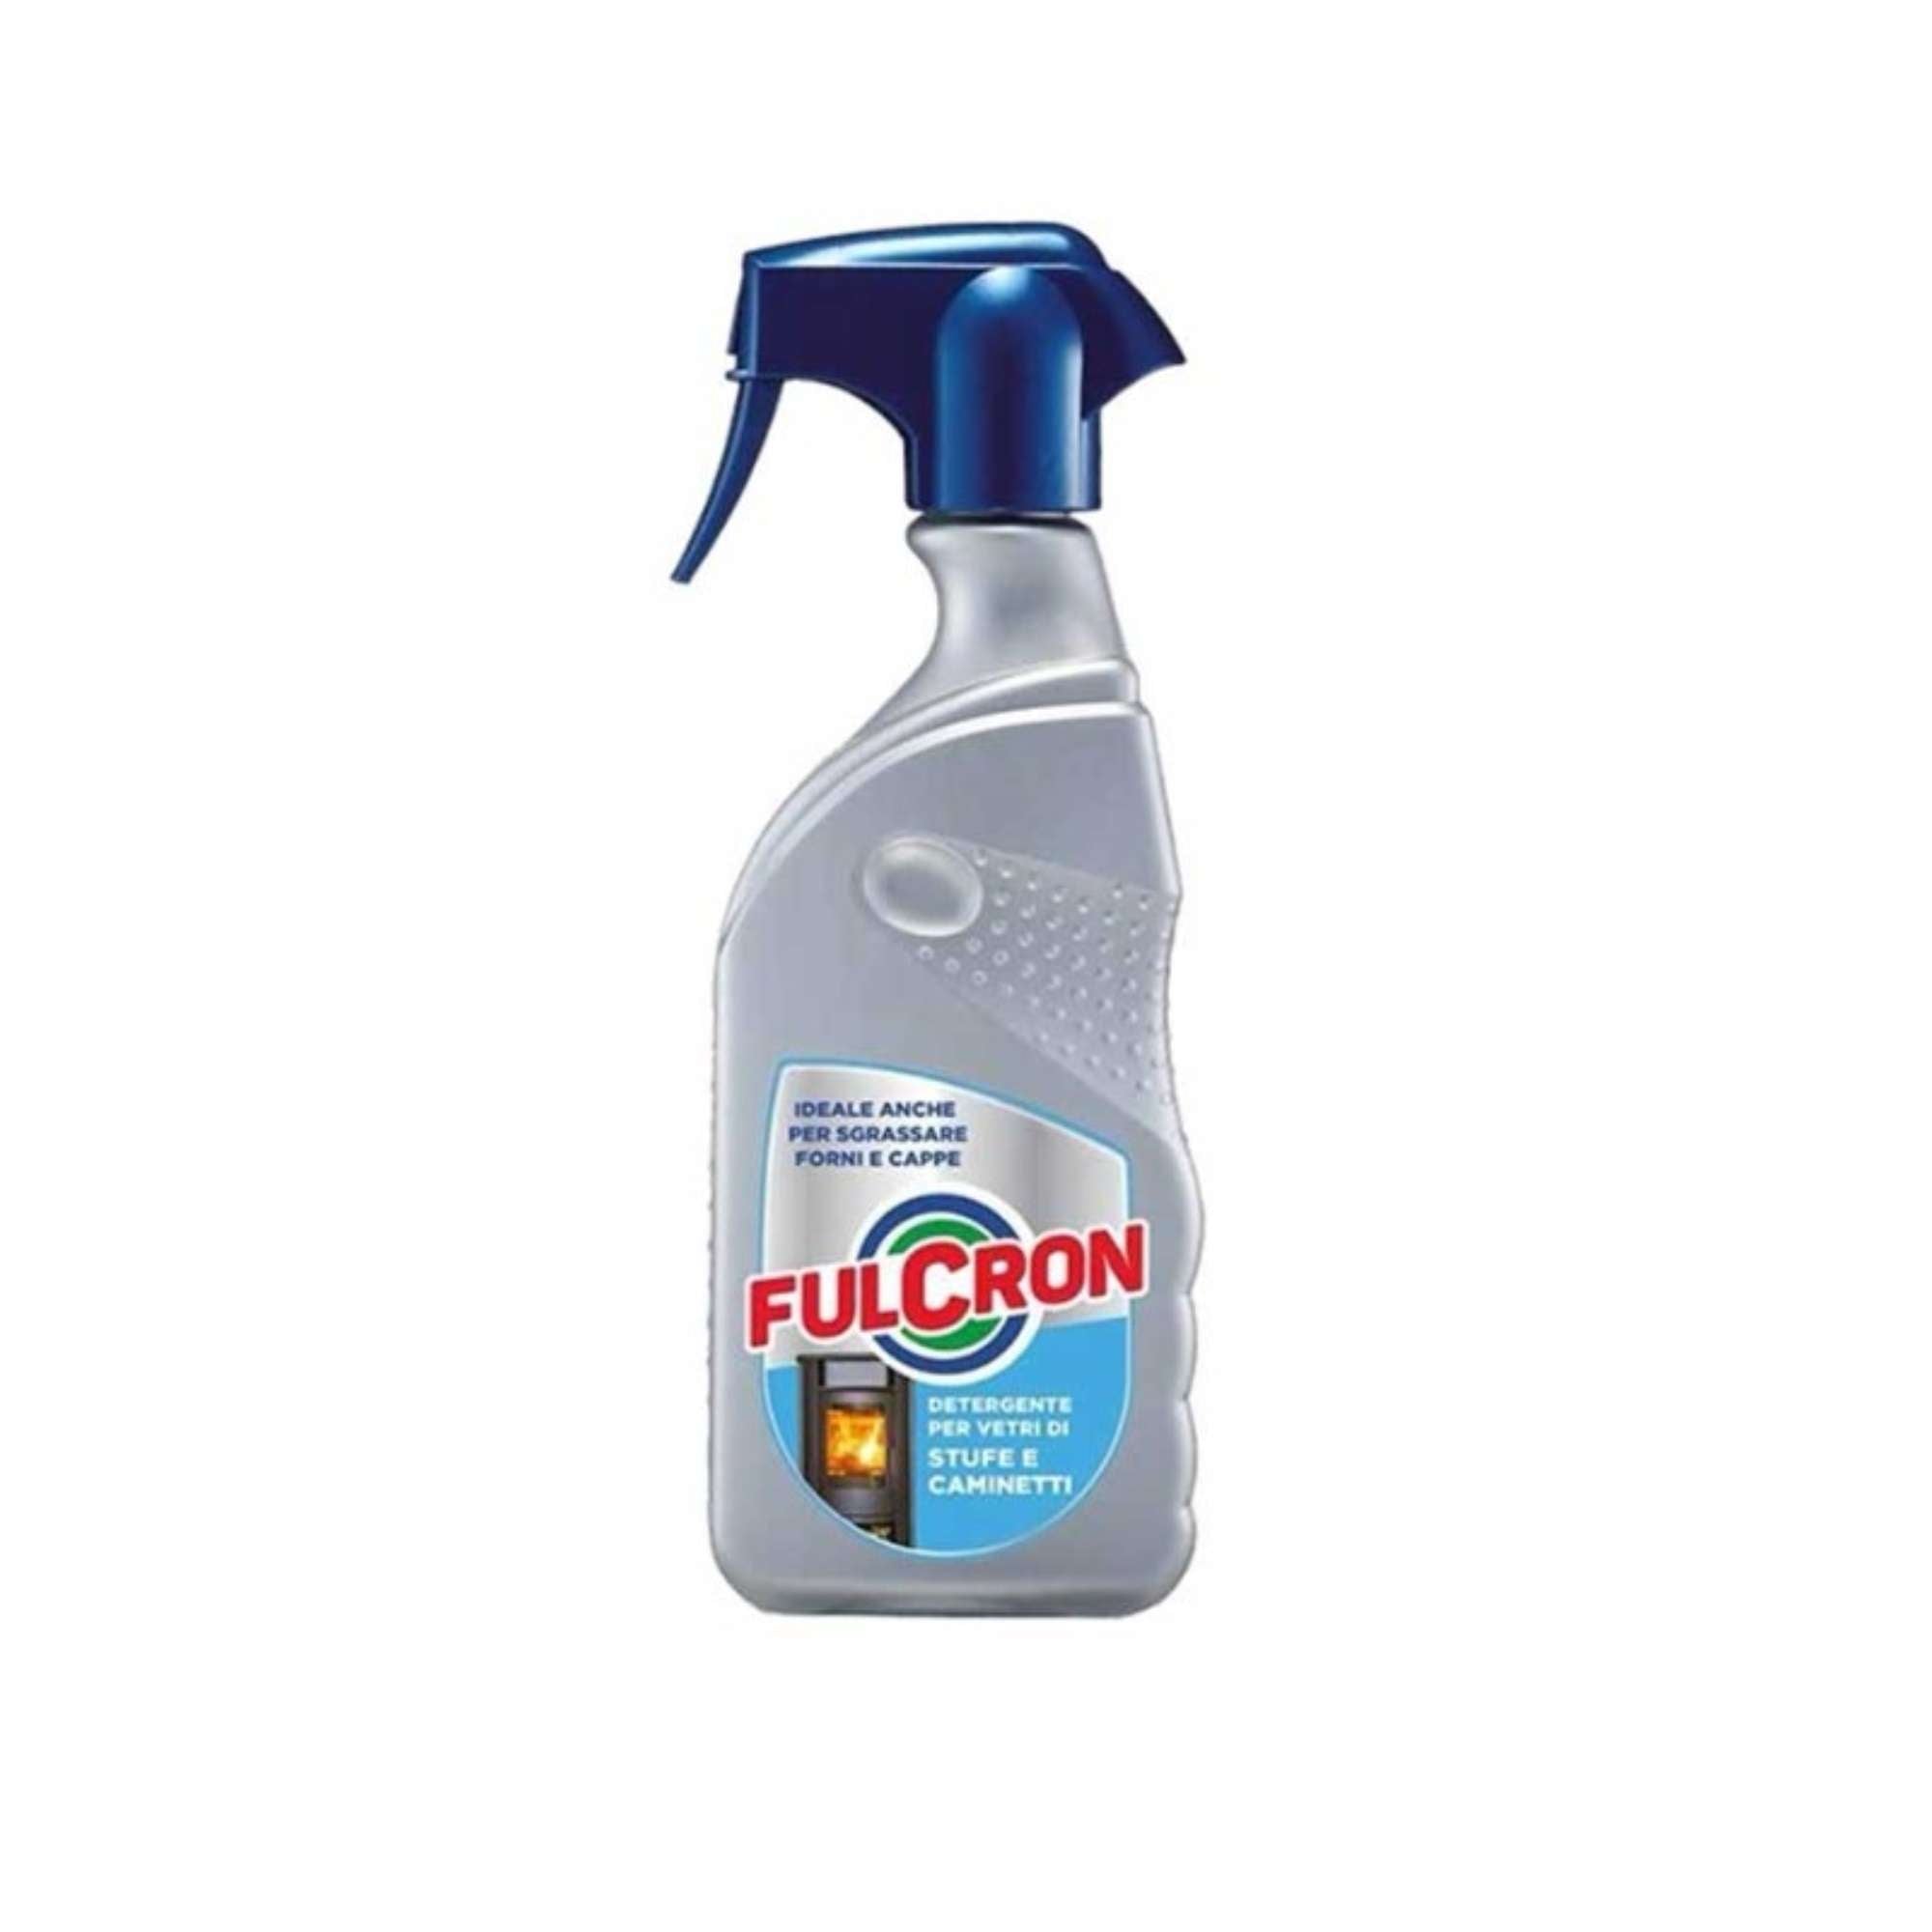 Fulcron Spray vetri e caminetti 500 ml - Arexons 2552